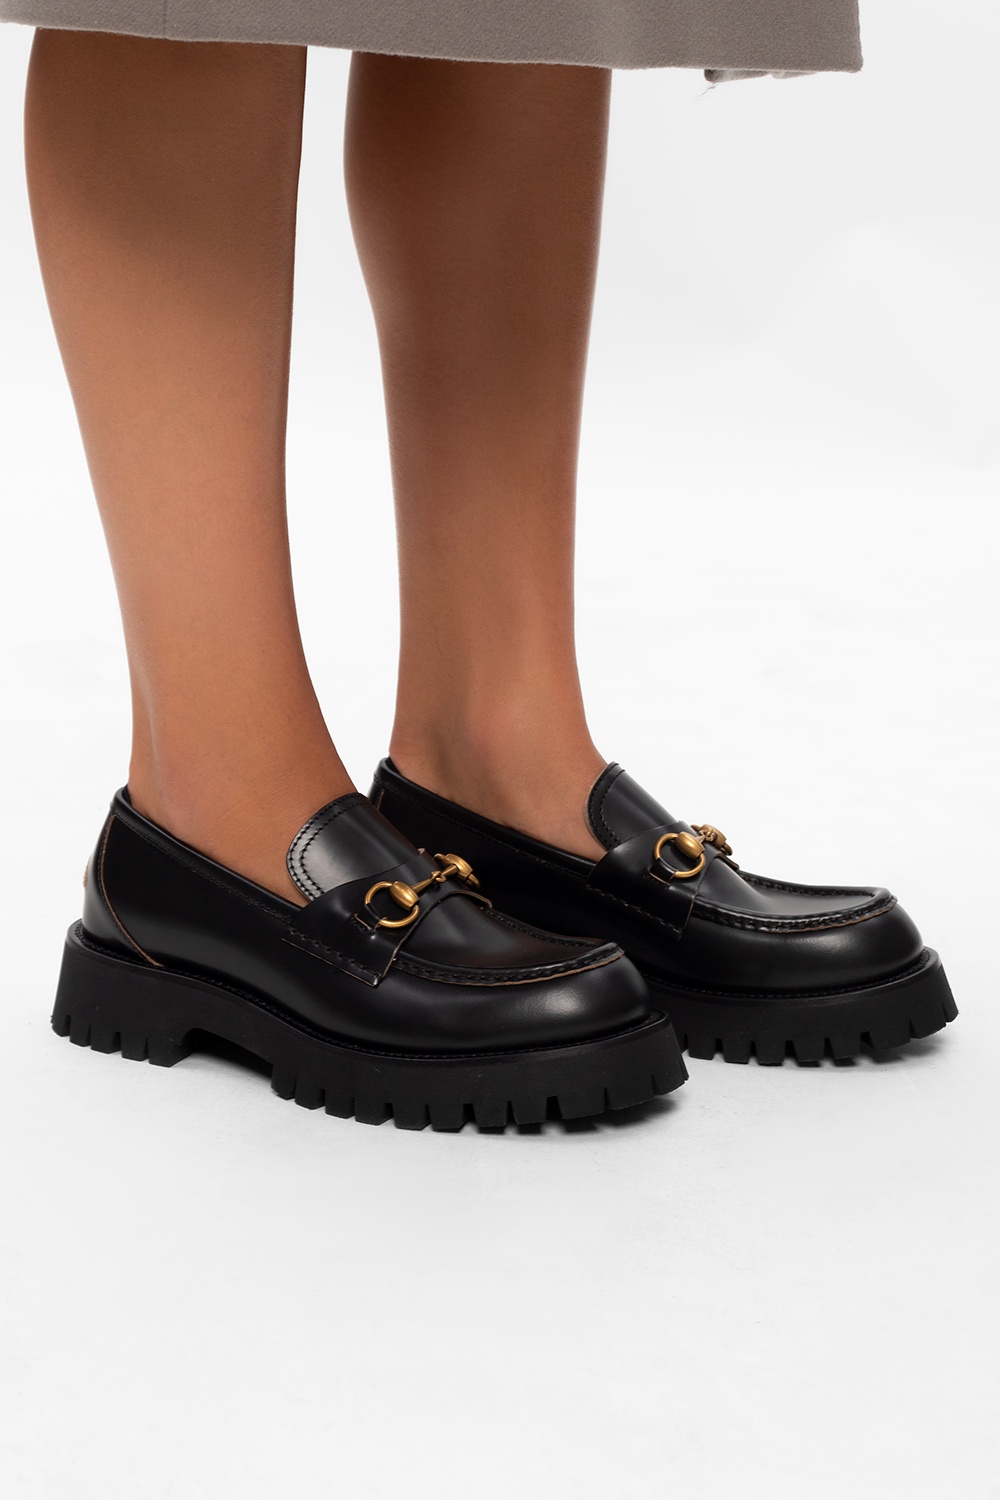 gucci platform loafers